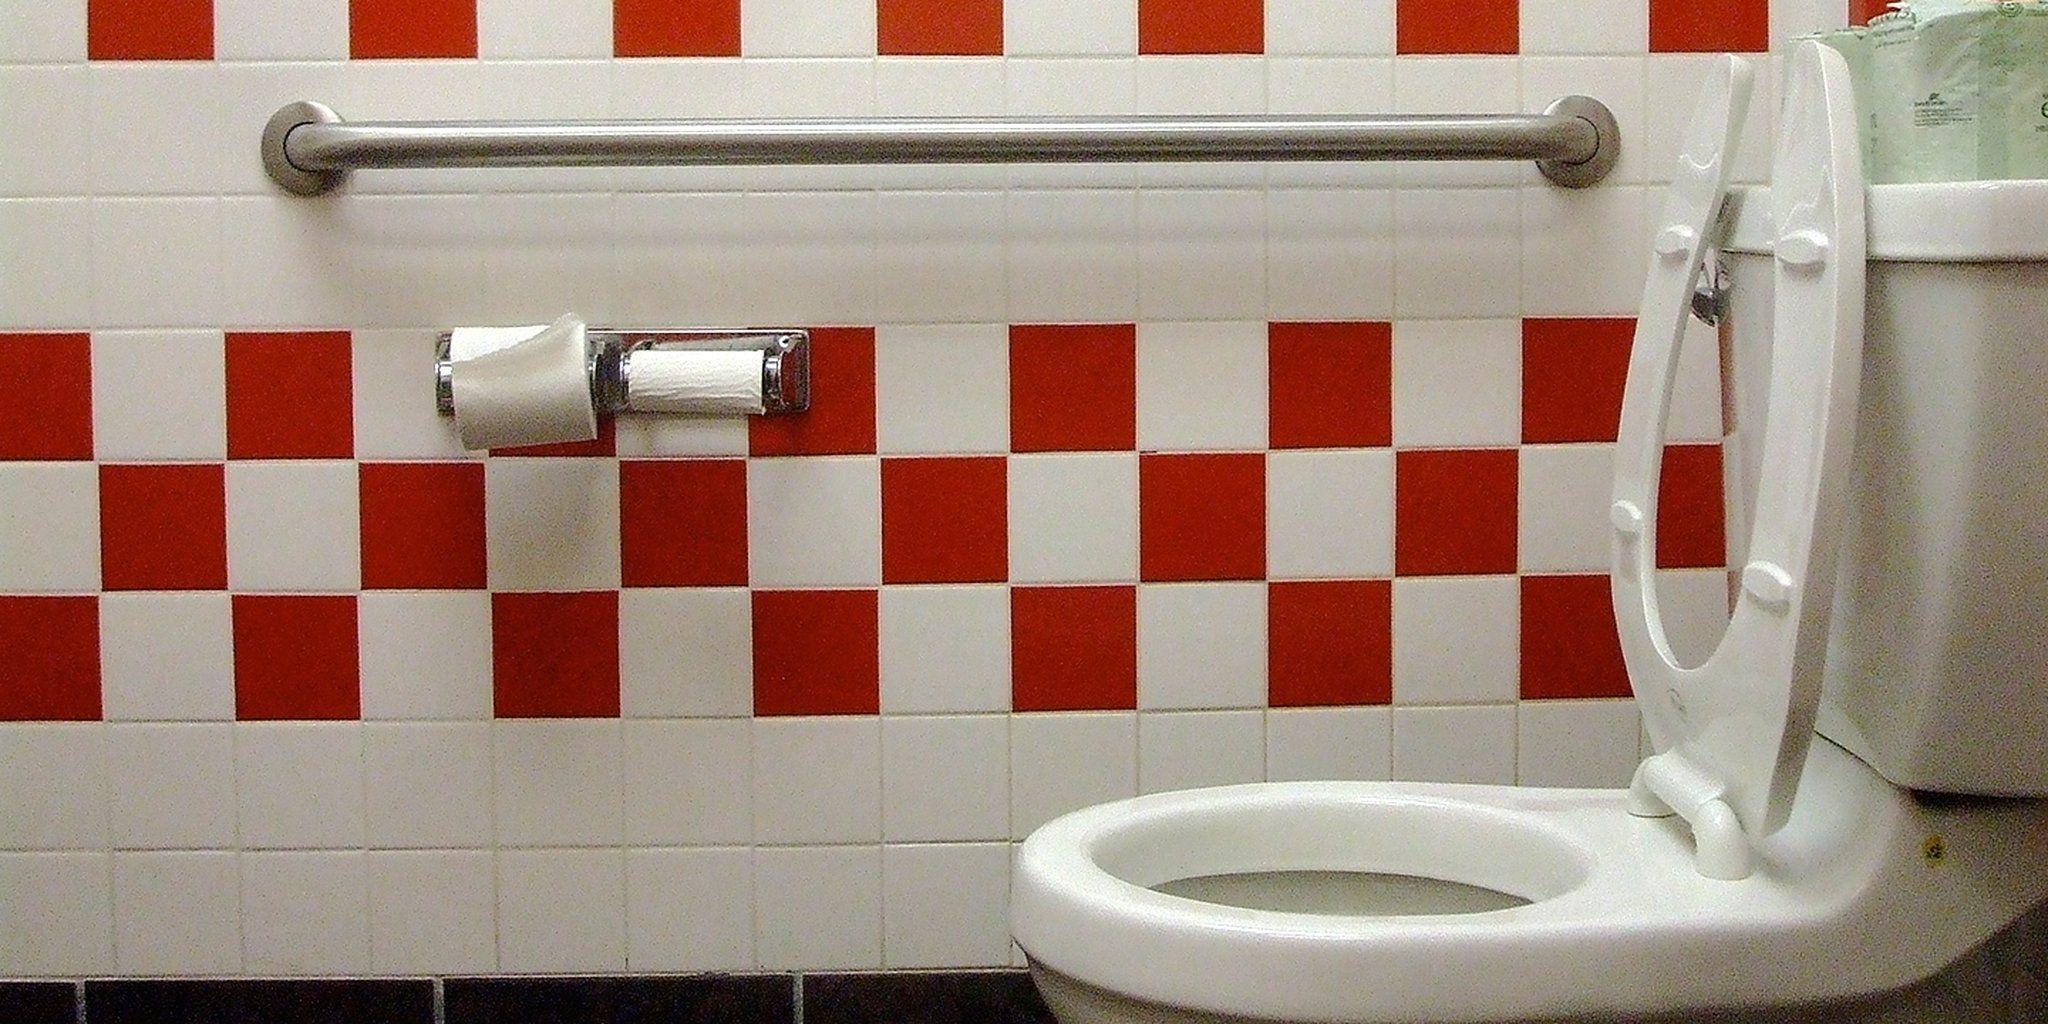 Bathroom peeing potty toilet trash